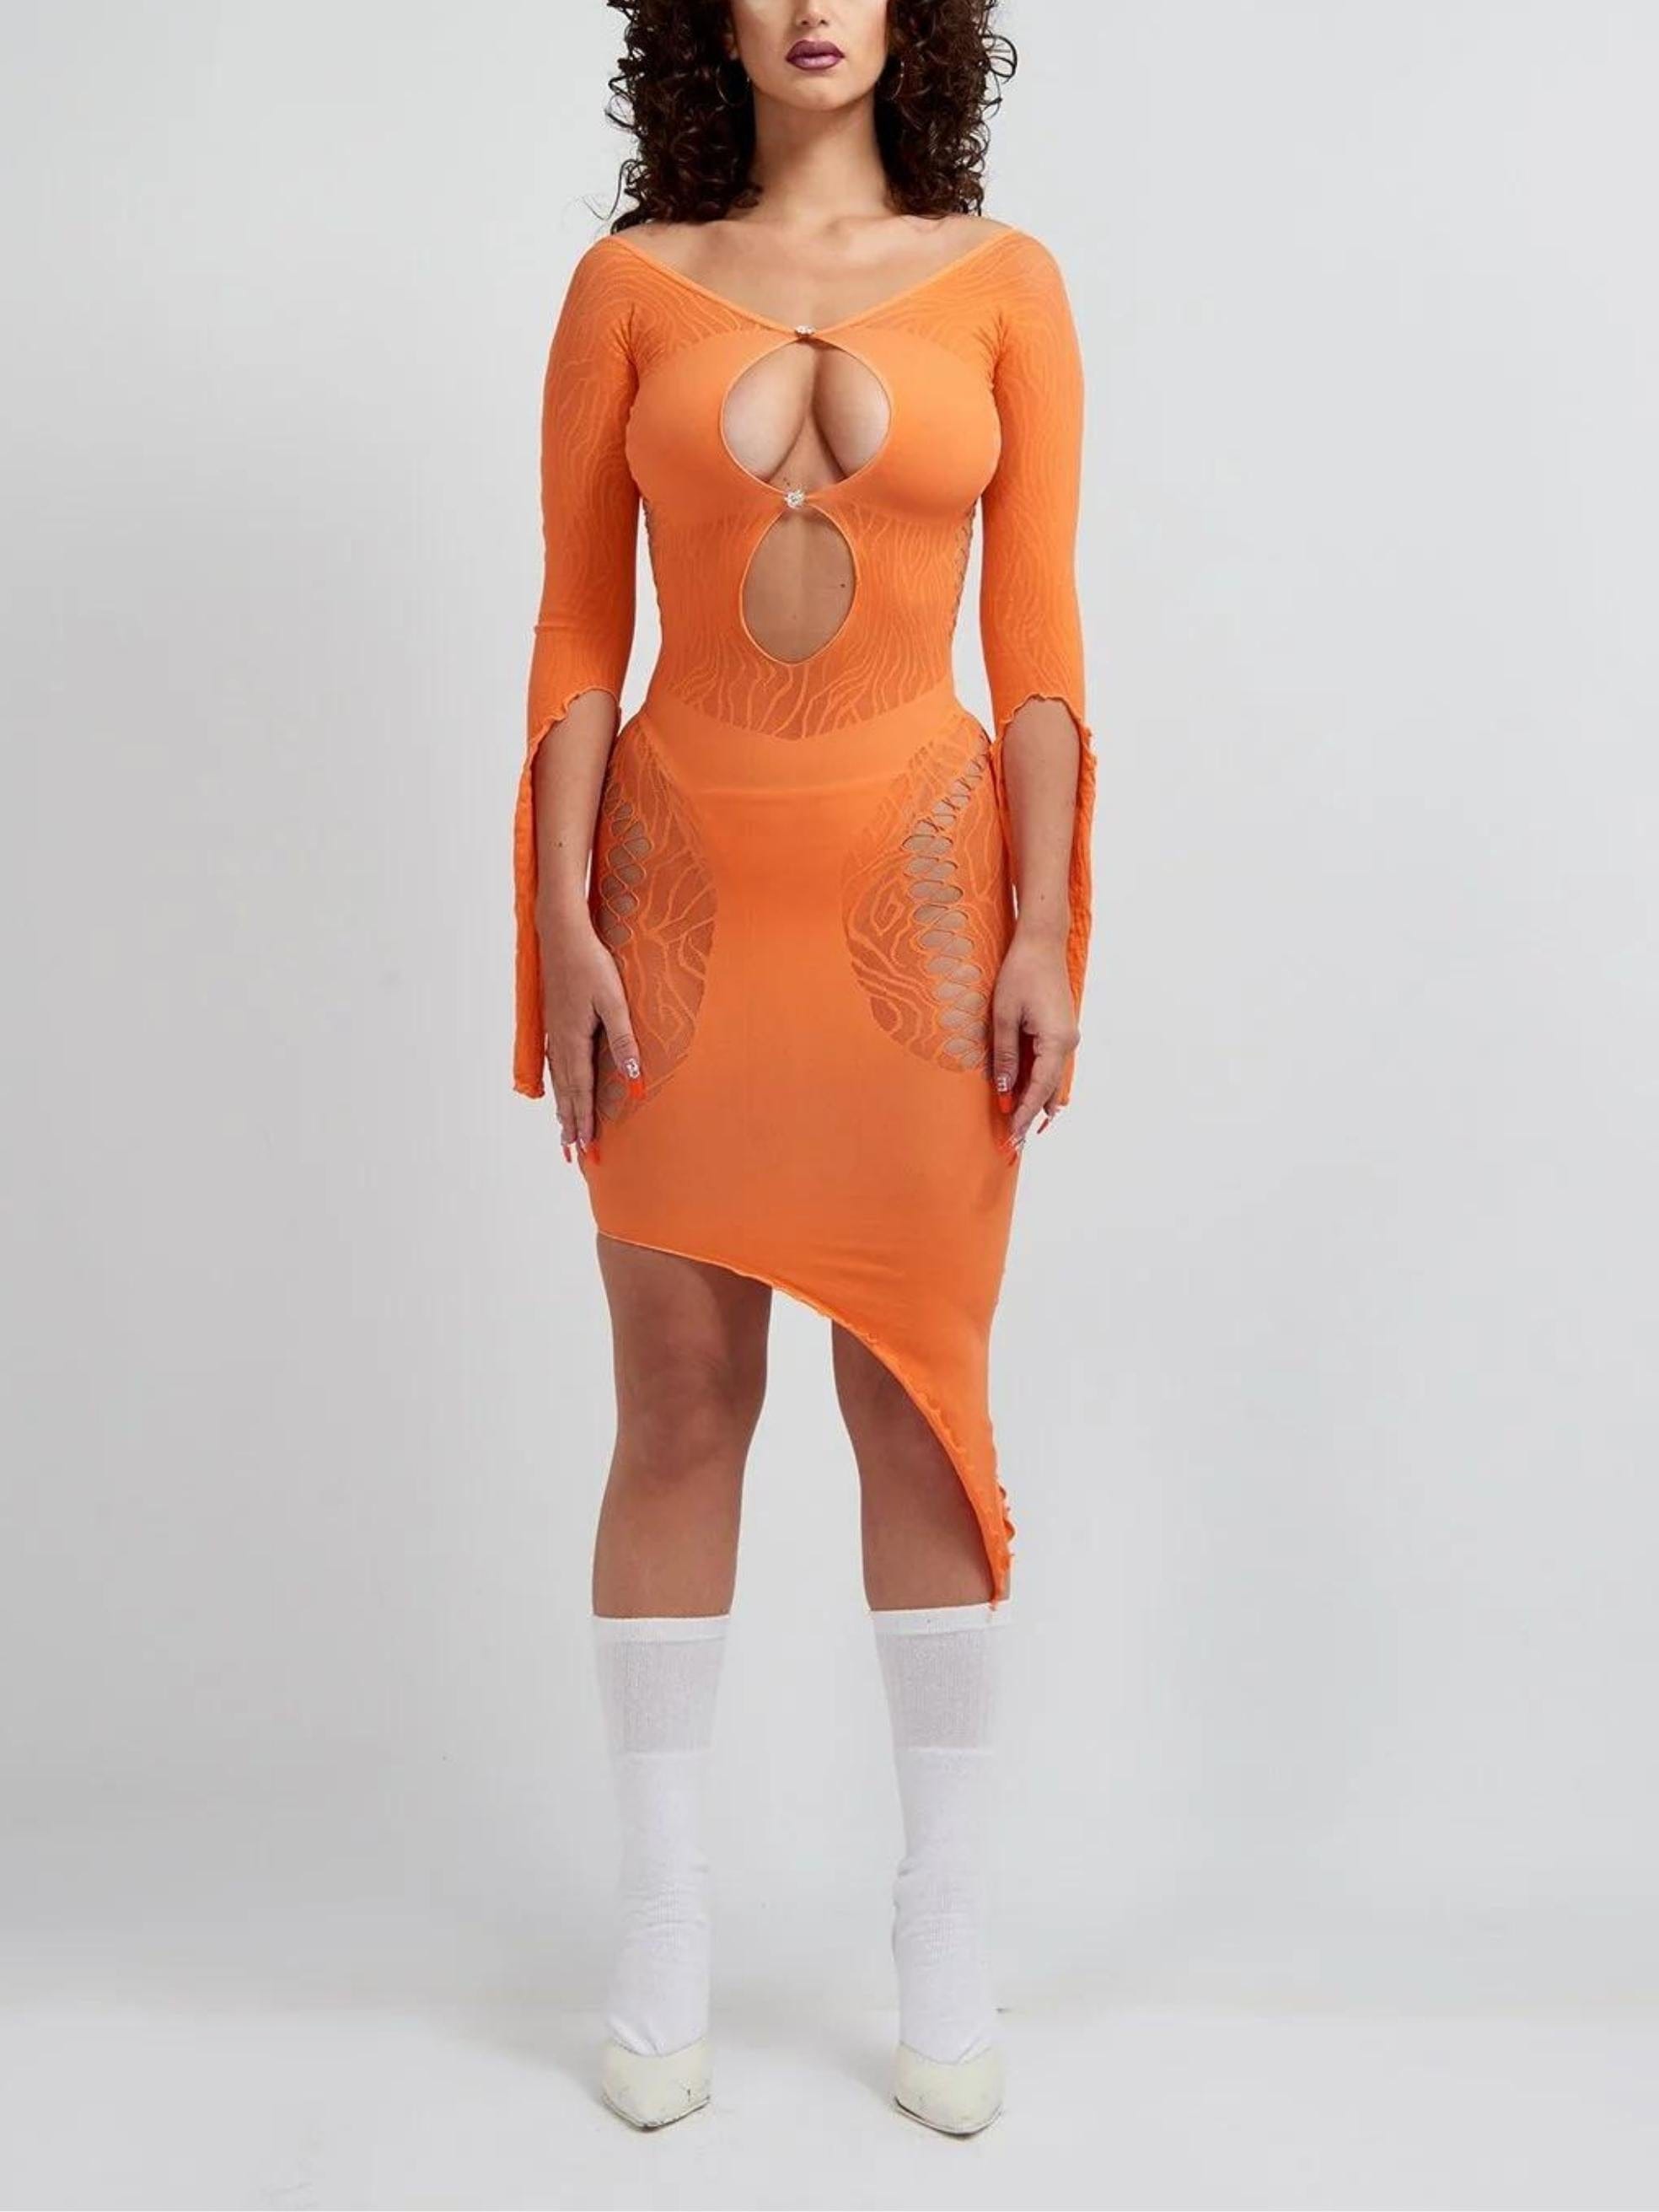 Charlotte Dress in Orange